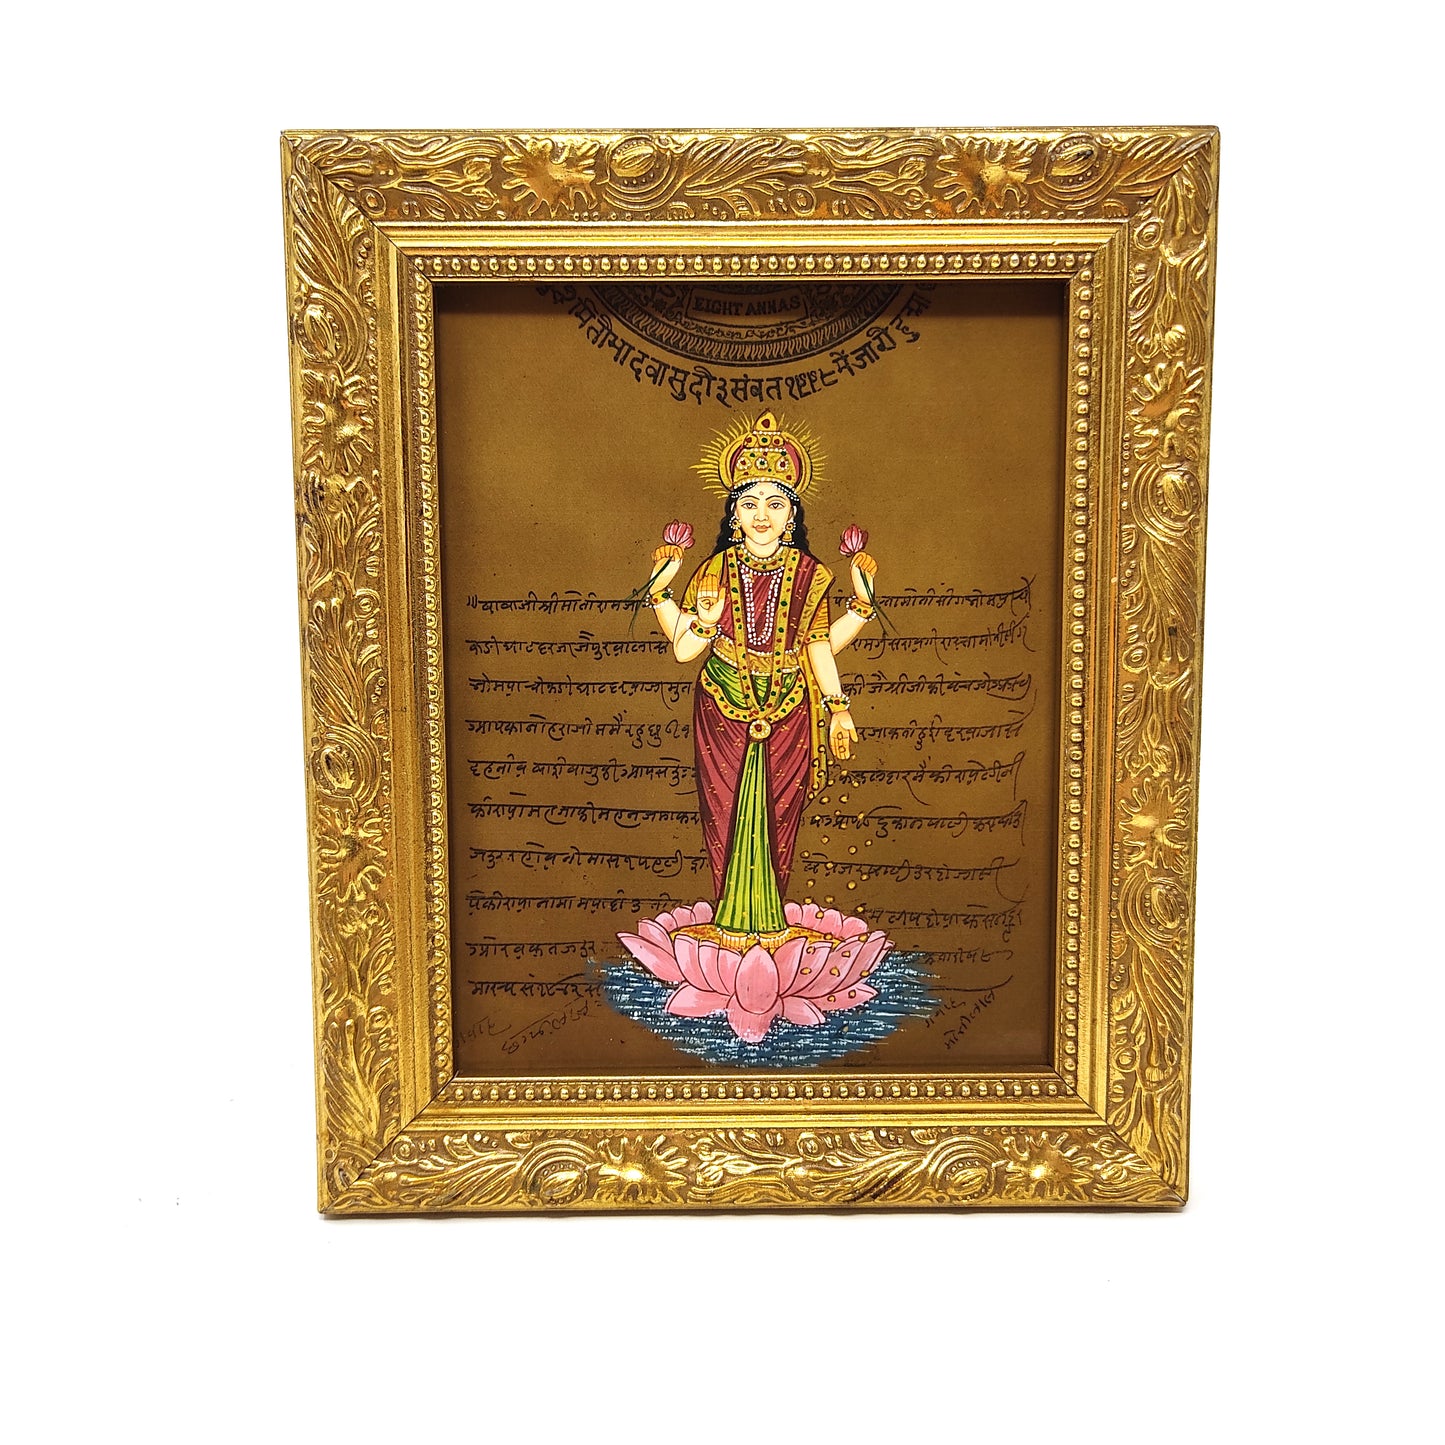 Framed Replica Rajasthani Miniature Painting Depicting India Goddess Lakshmi 5.75"